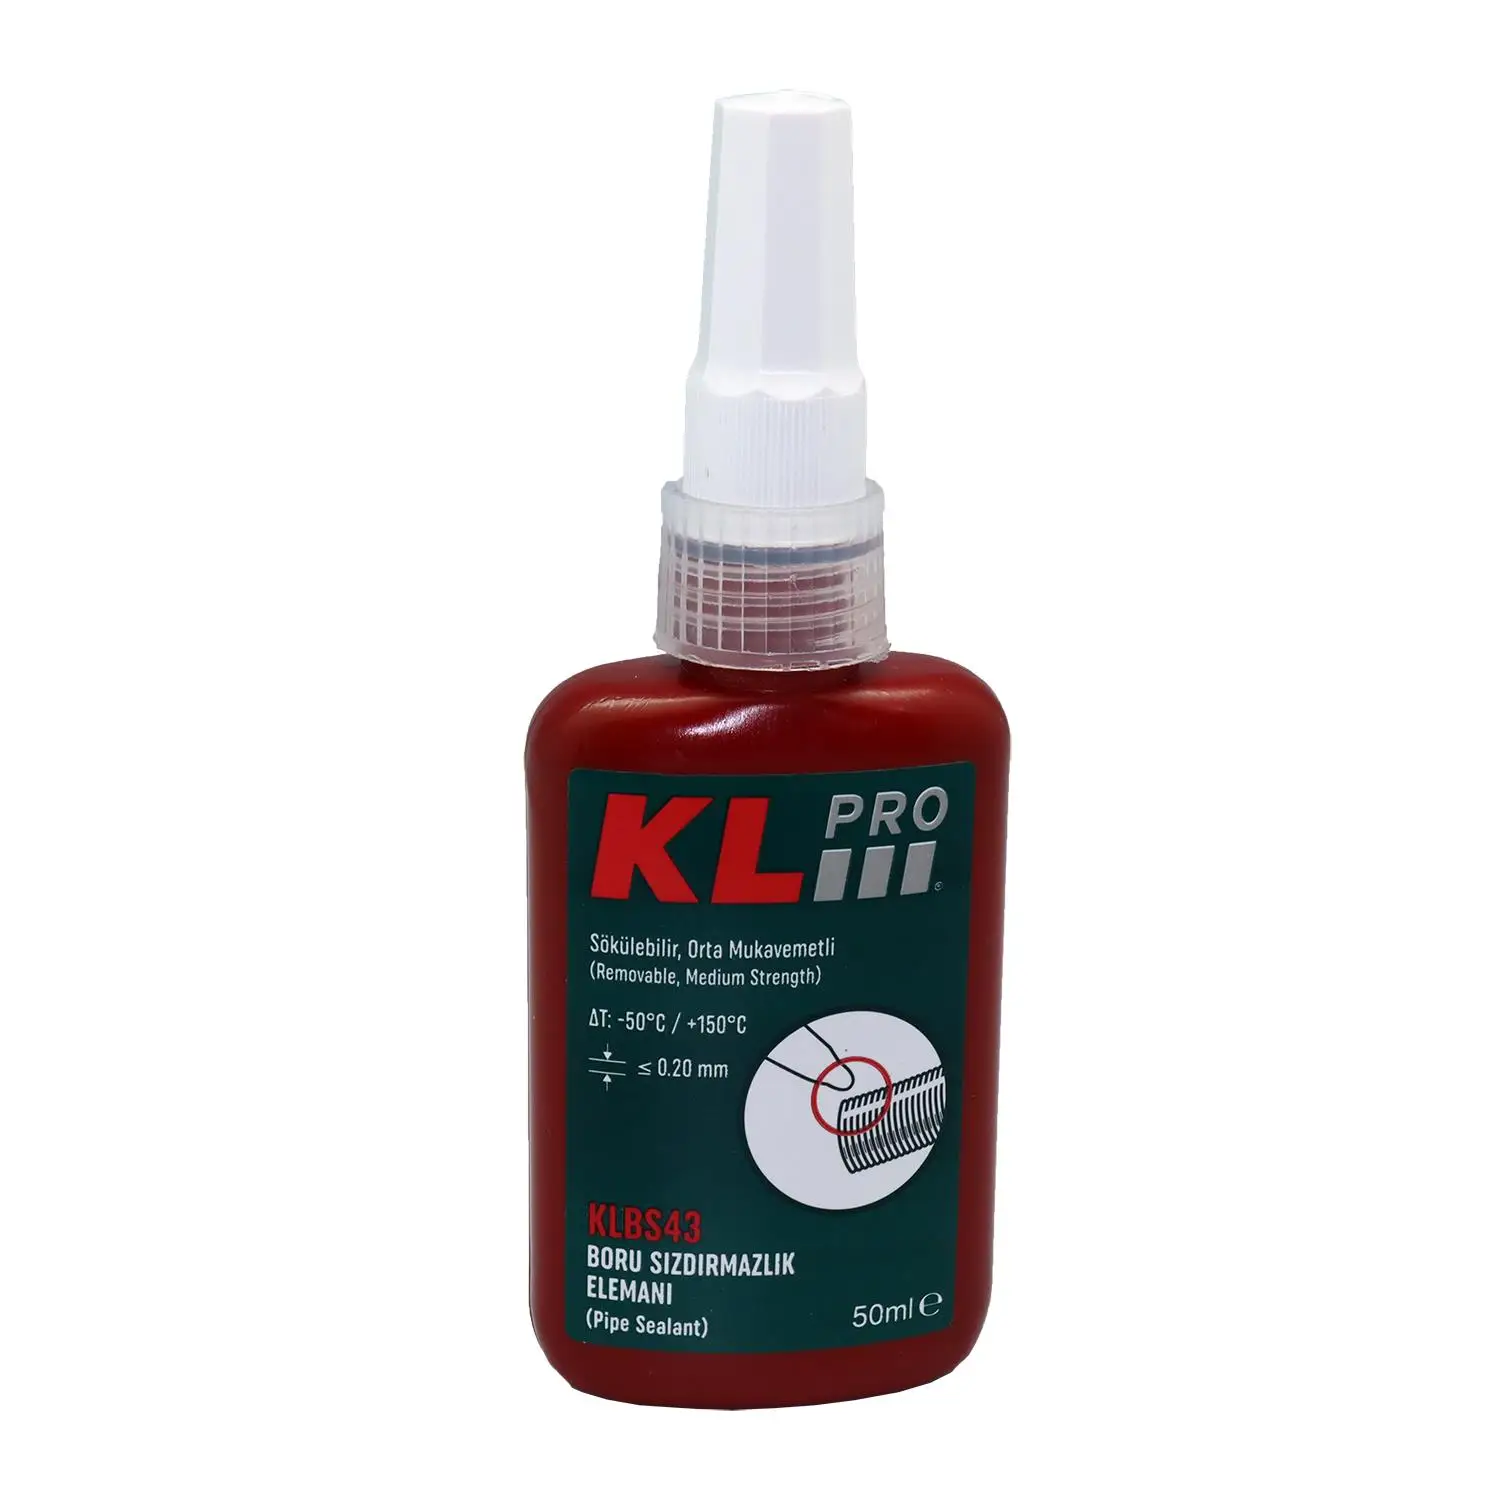 

KLPRO KLCS43-50 50ml Bolt Stabilizer